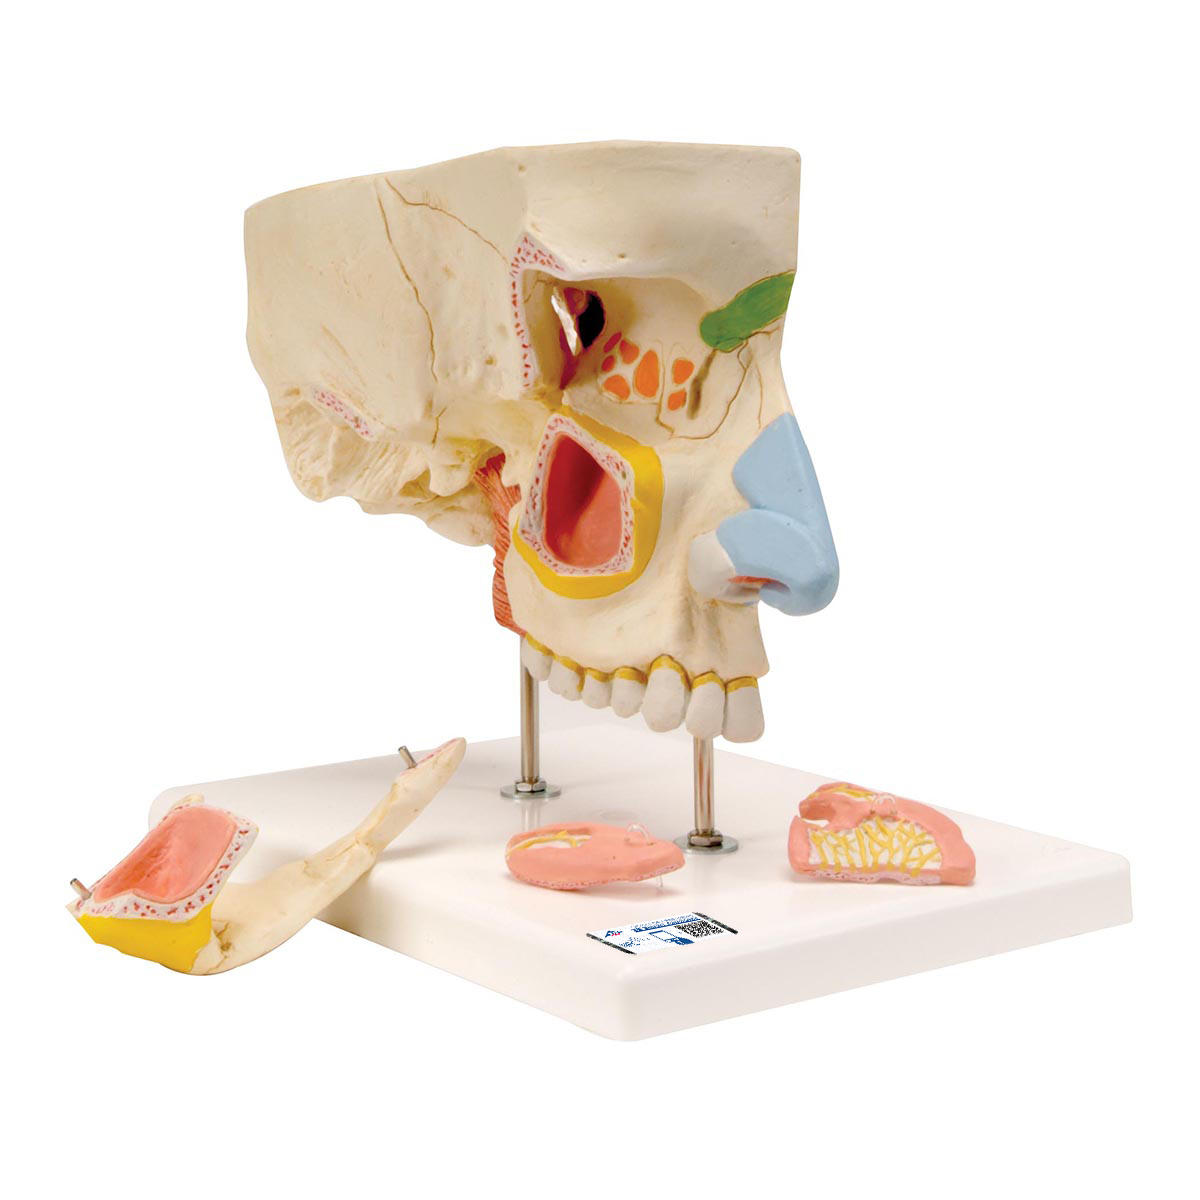 Nasenmodell mit Nasennebenhöhlen, 5-teilig - 3B Smart Anatomy, Bestellnummer 1000254, E20, 3B Scientific